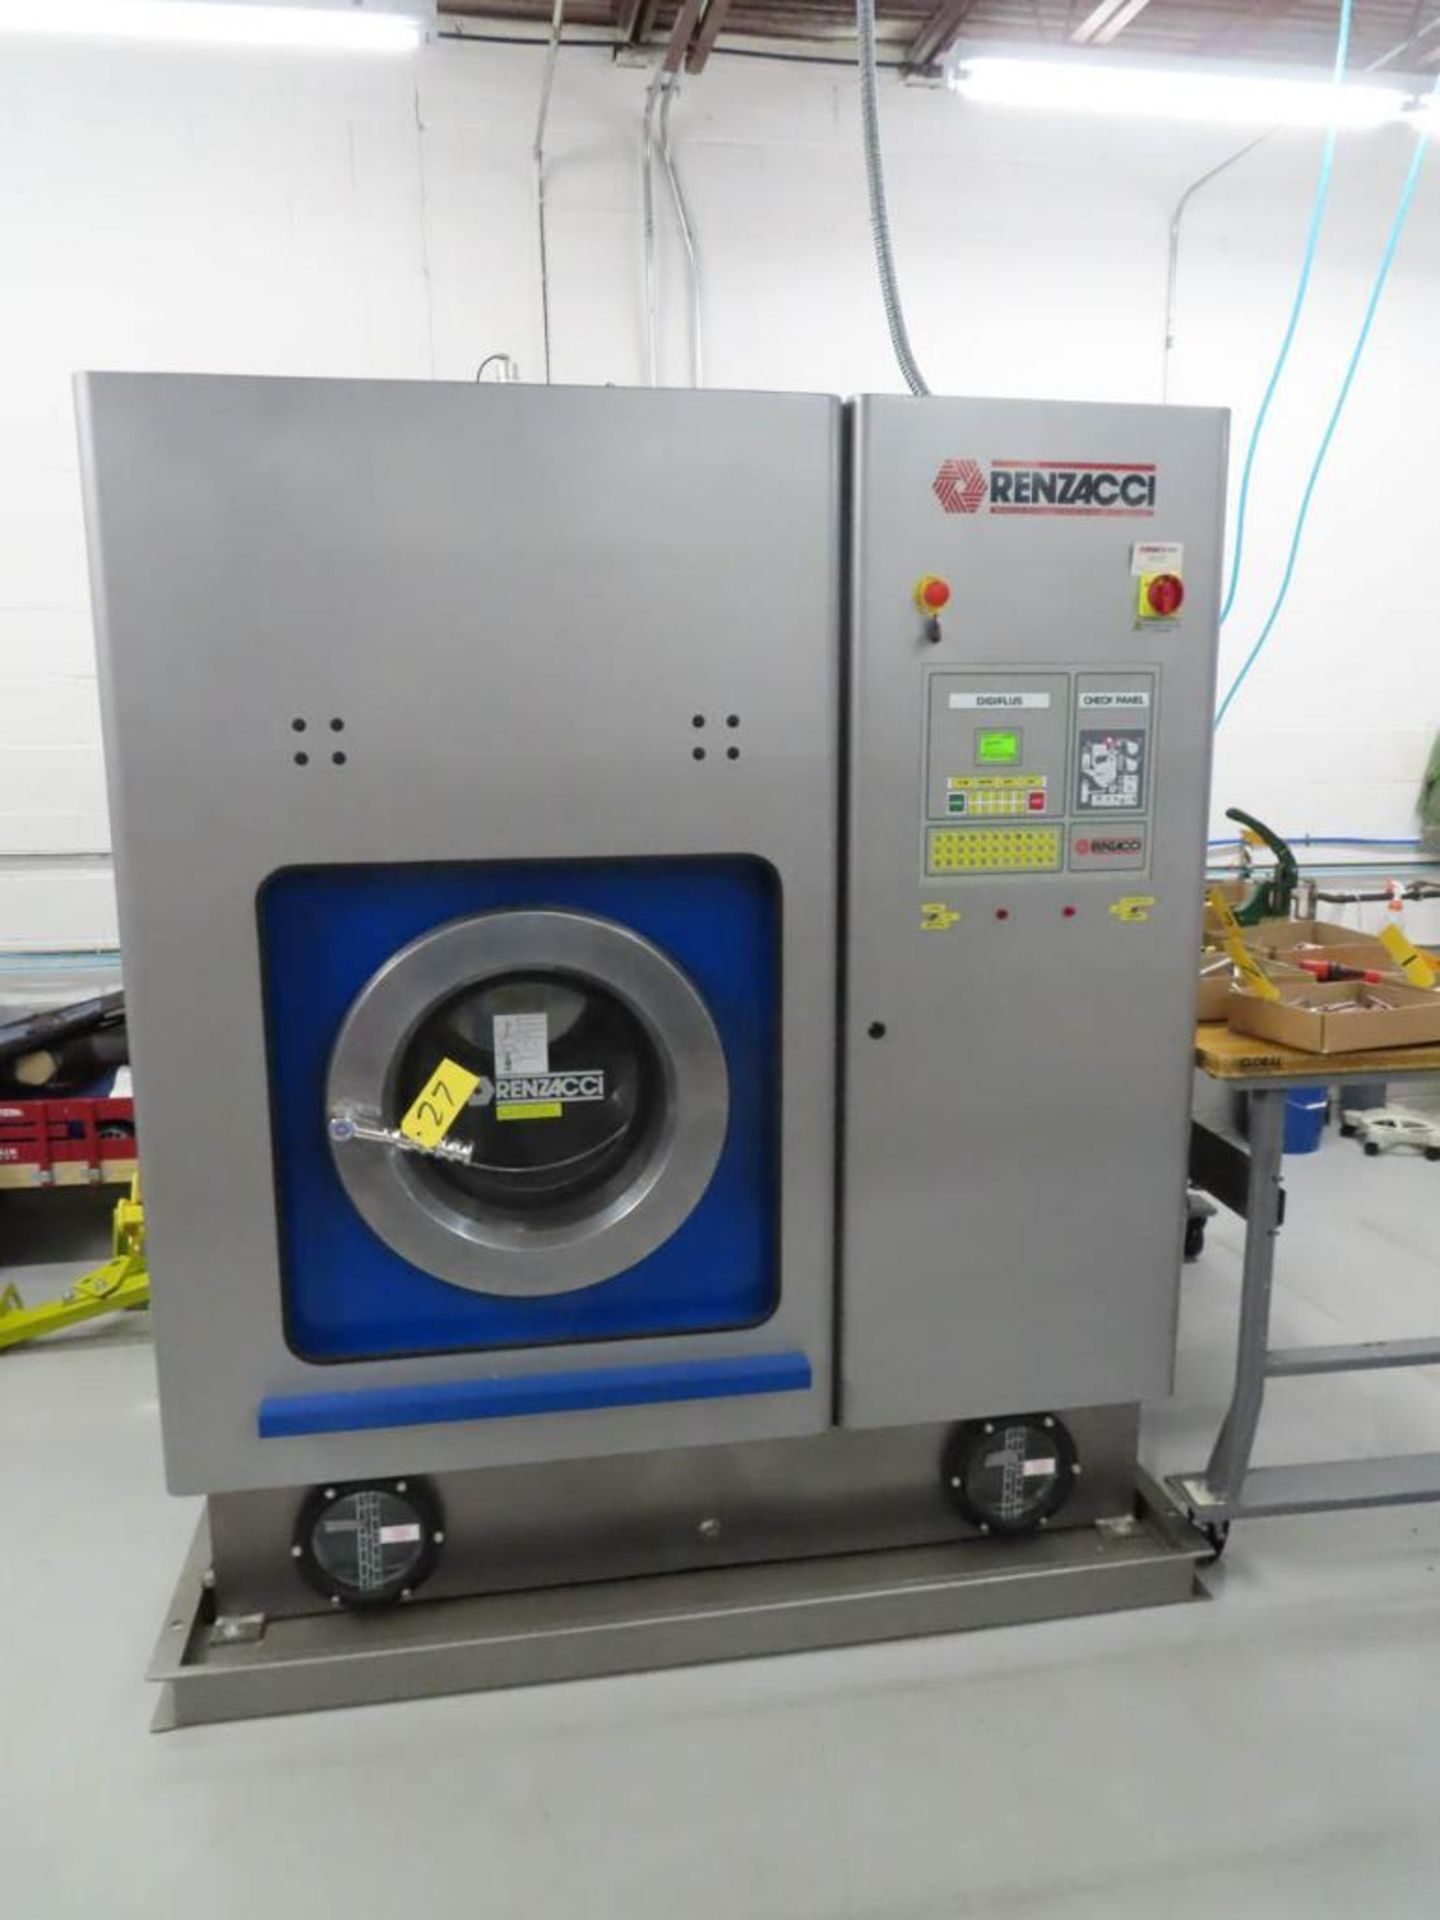 Renzacc, Mdl.Progress 34, 55LBS Capacity (Dry) Dry-cleaning Machine